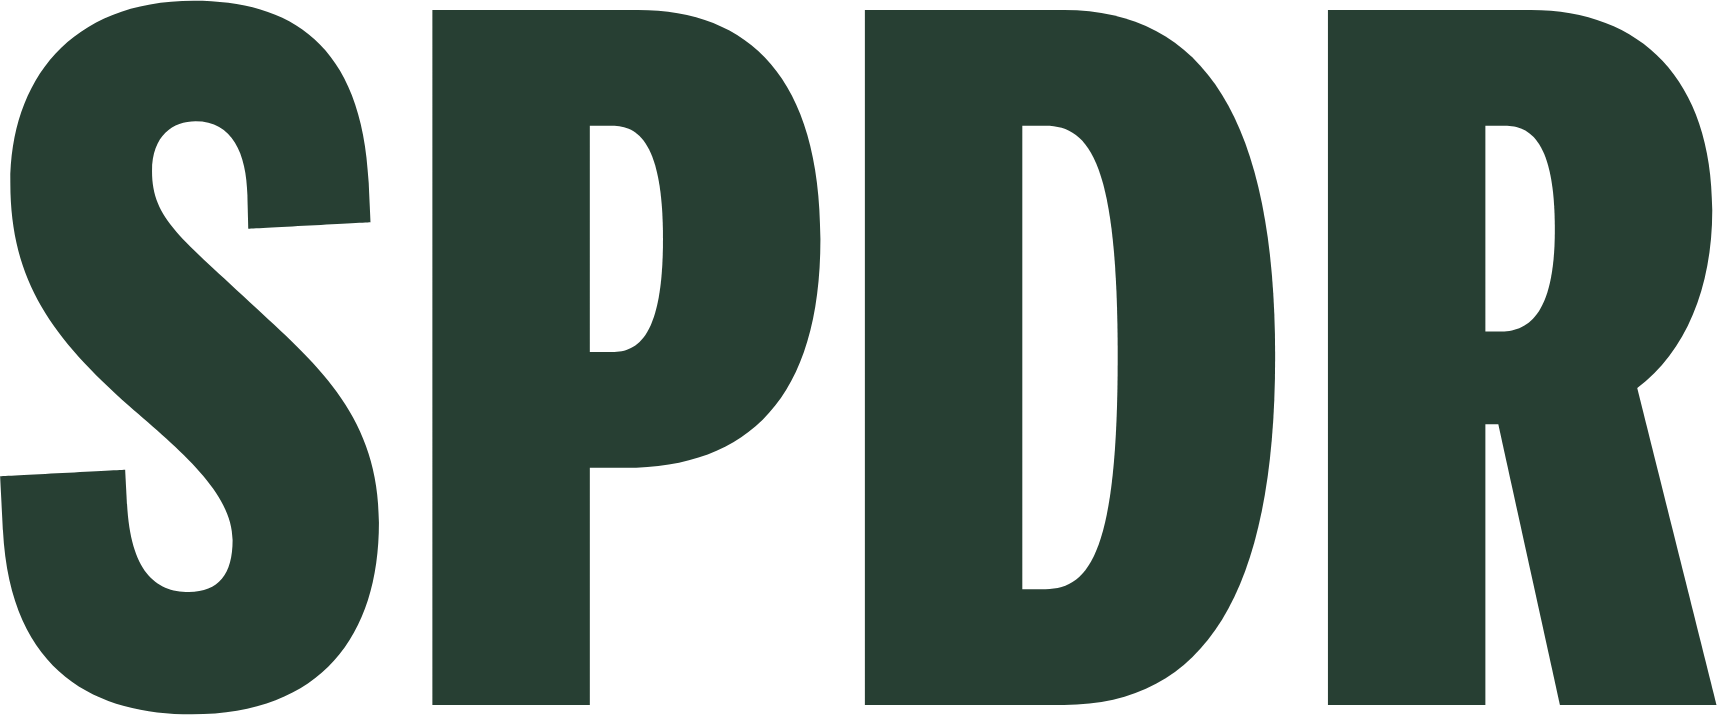 SPDR S&P 500 ETF Trust logo (PNG transparent)